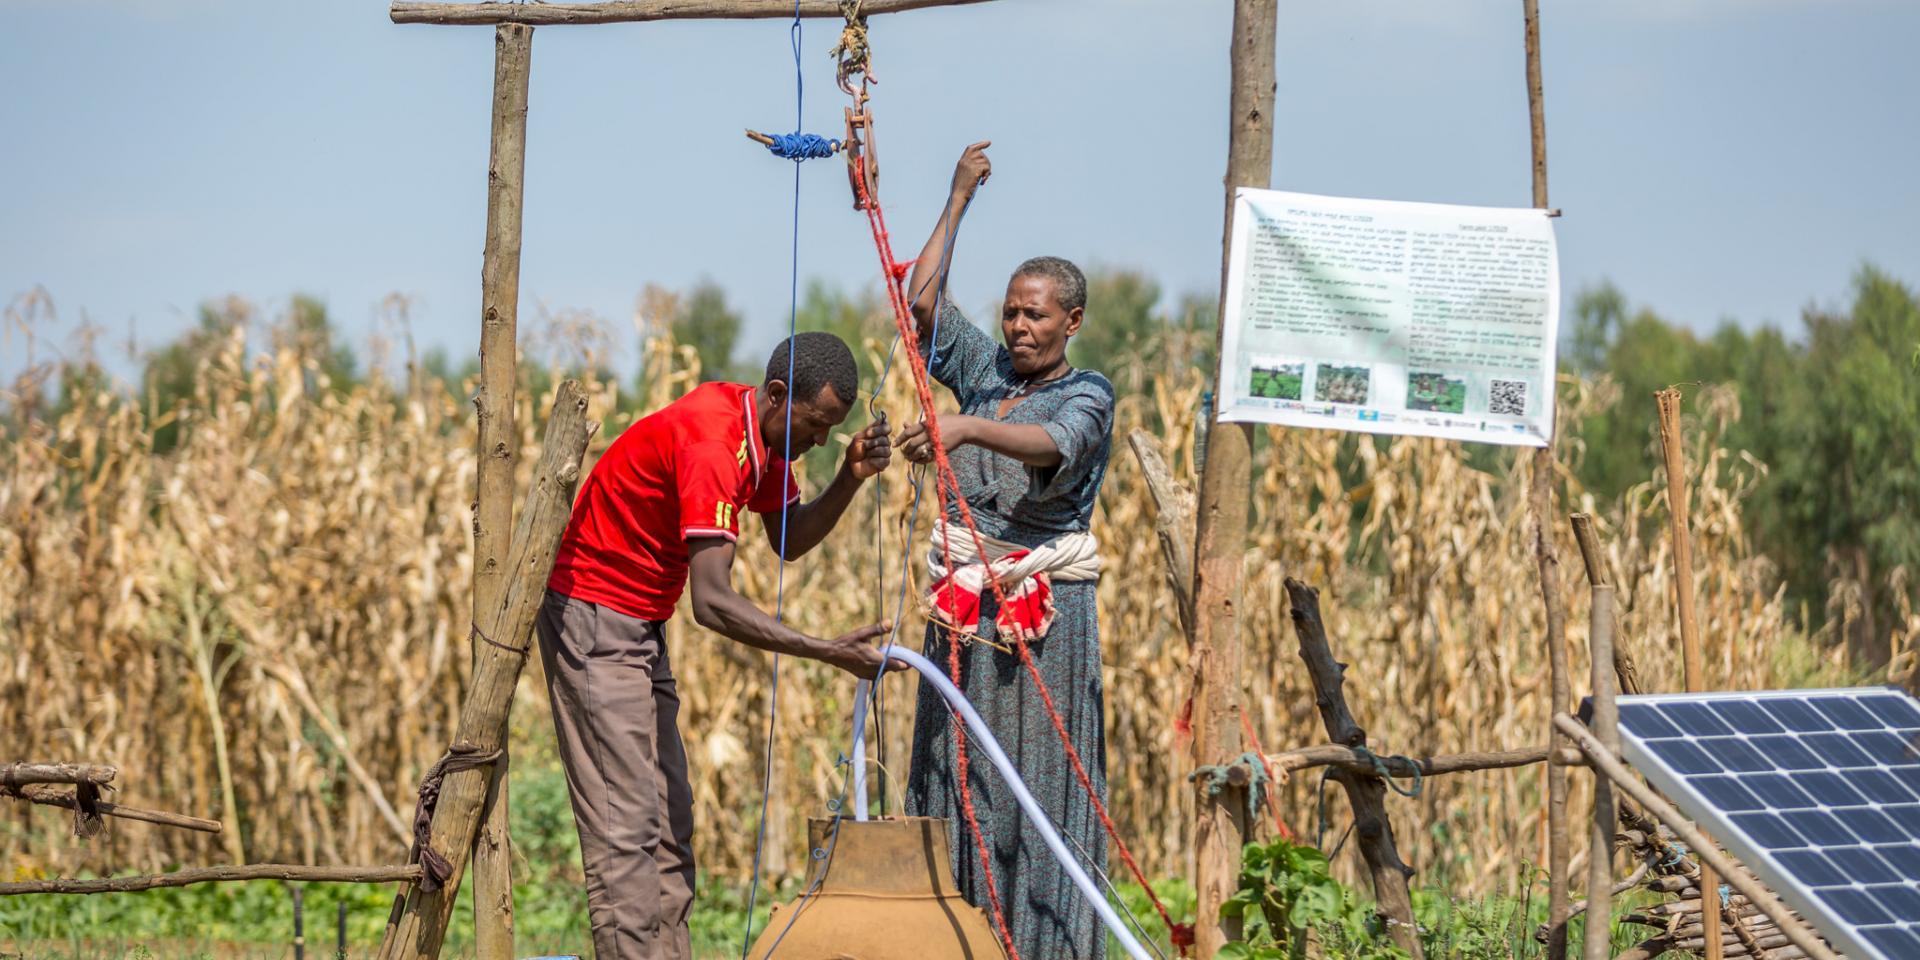 In Danghesta village, Dangila district, Amhara region, Ethiopia, woman and man set up a solar-powered pump.